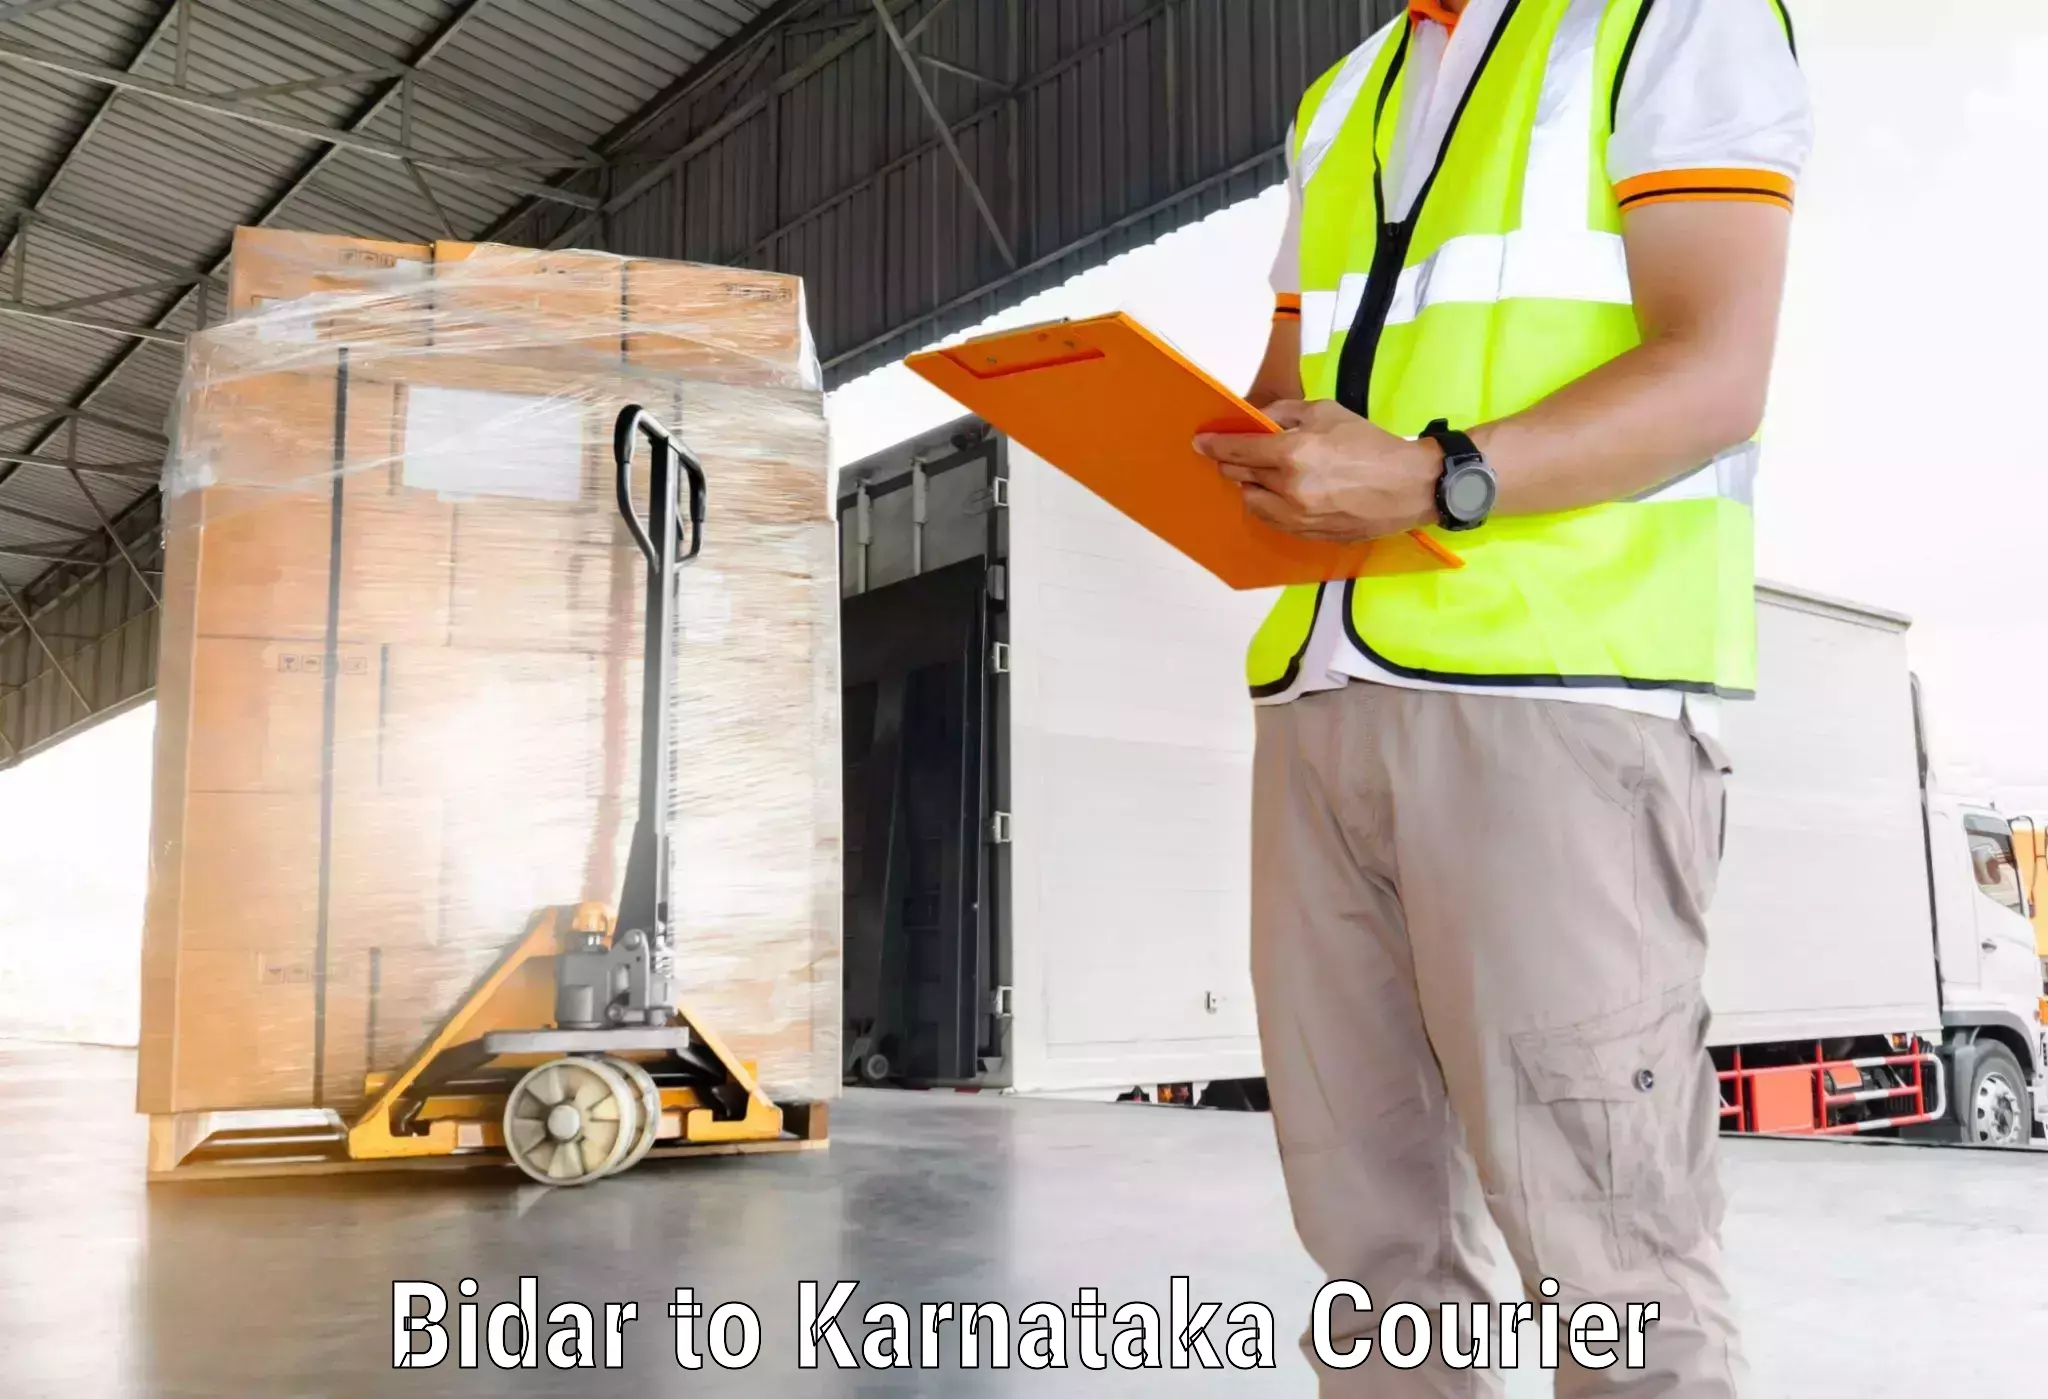 Package delivery network Bidar to Gulbarga